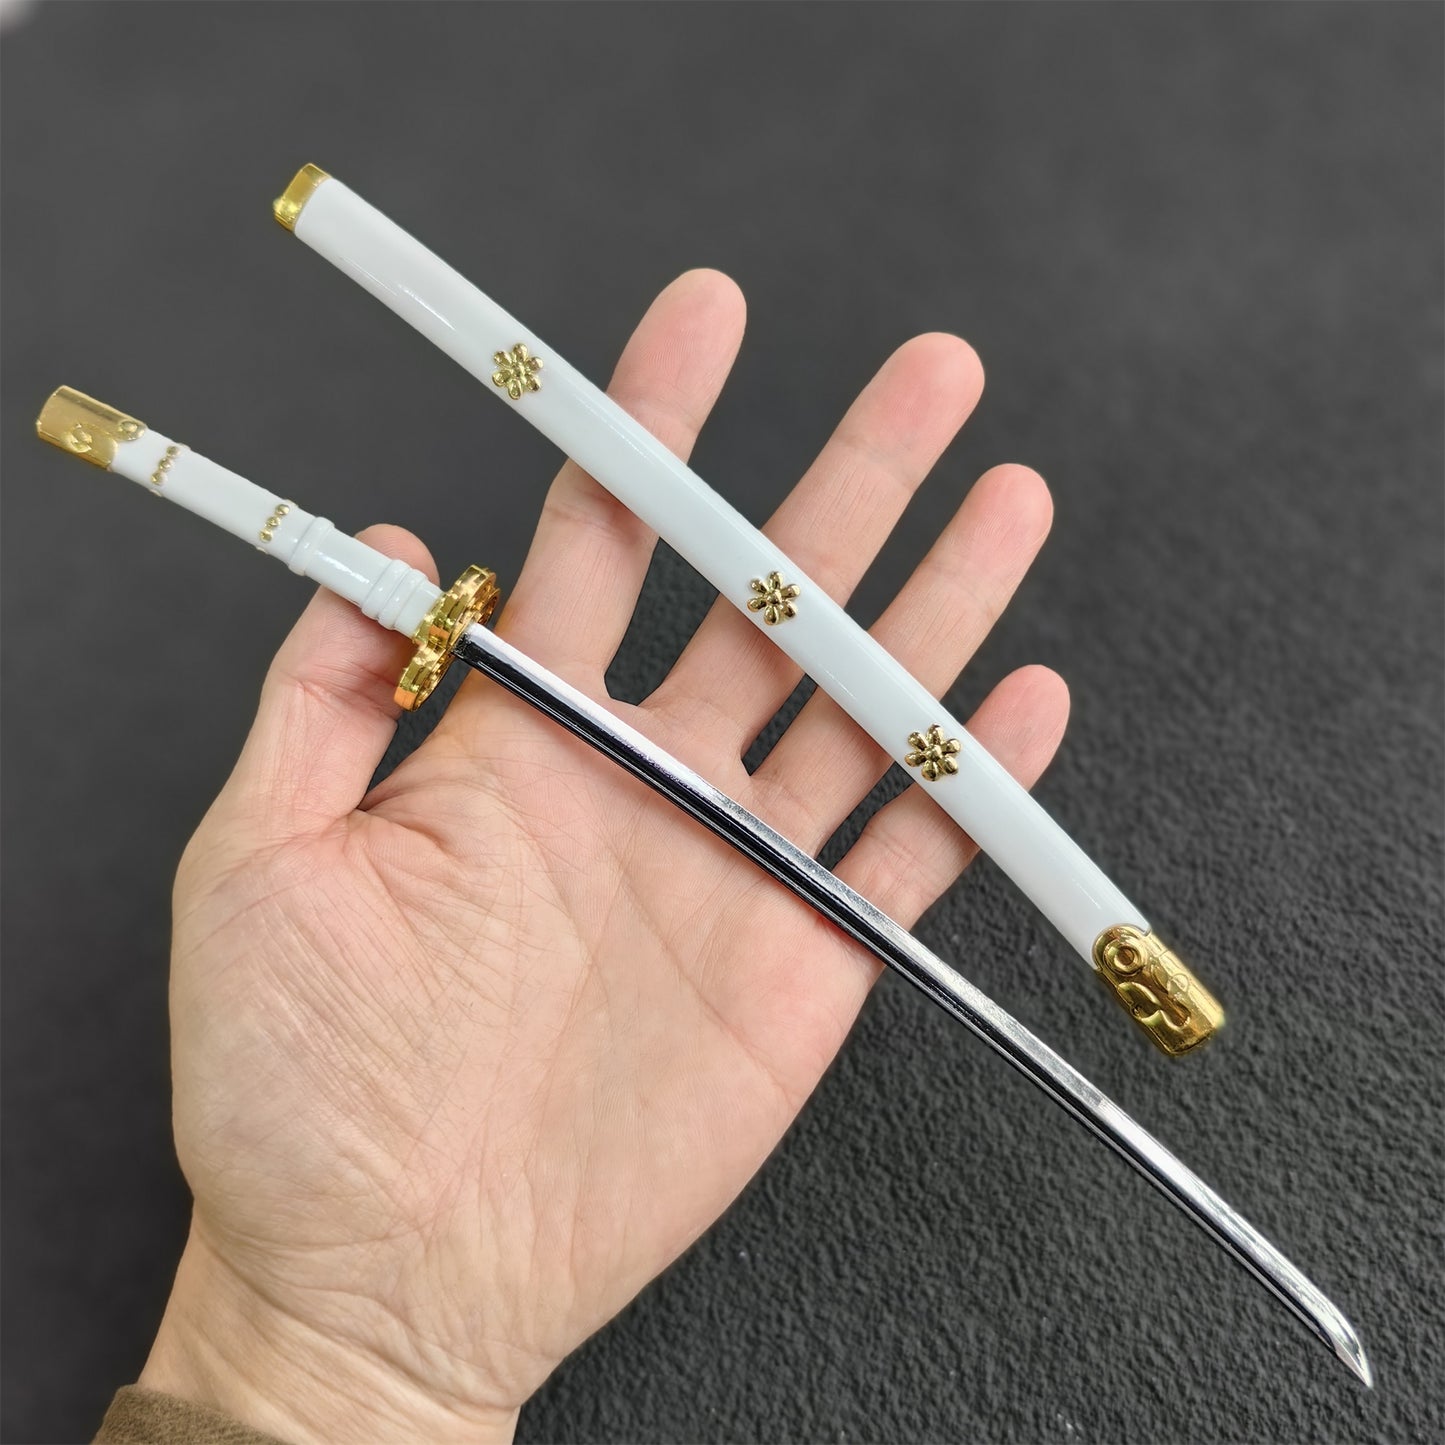 New Generation Roronoa Zoro Swords Metal Miniature Collection